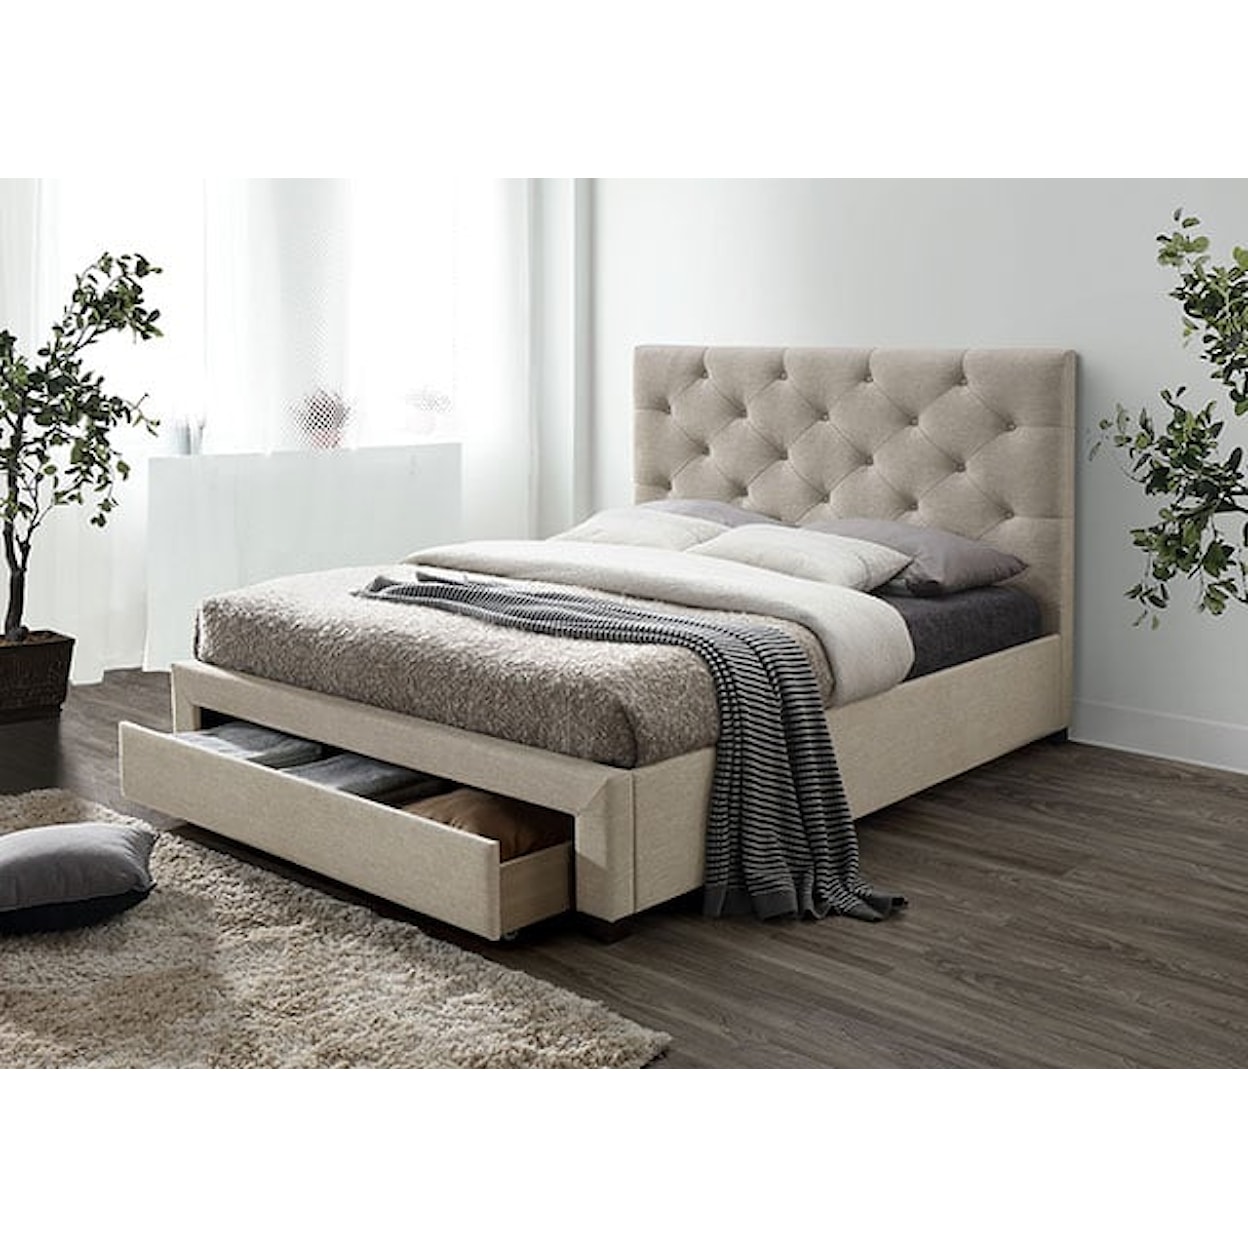 Furniture of America Sybella Full Storage Bed